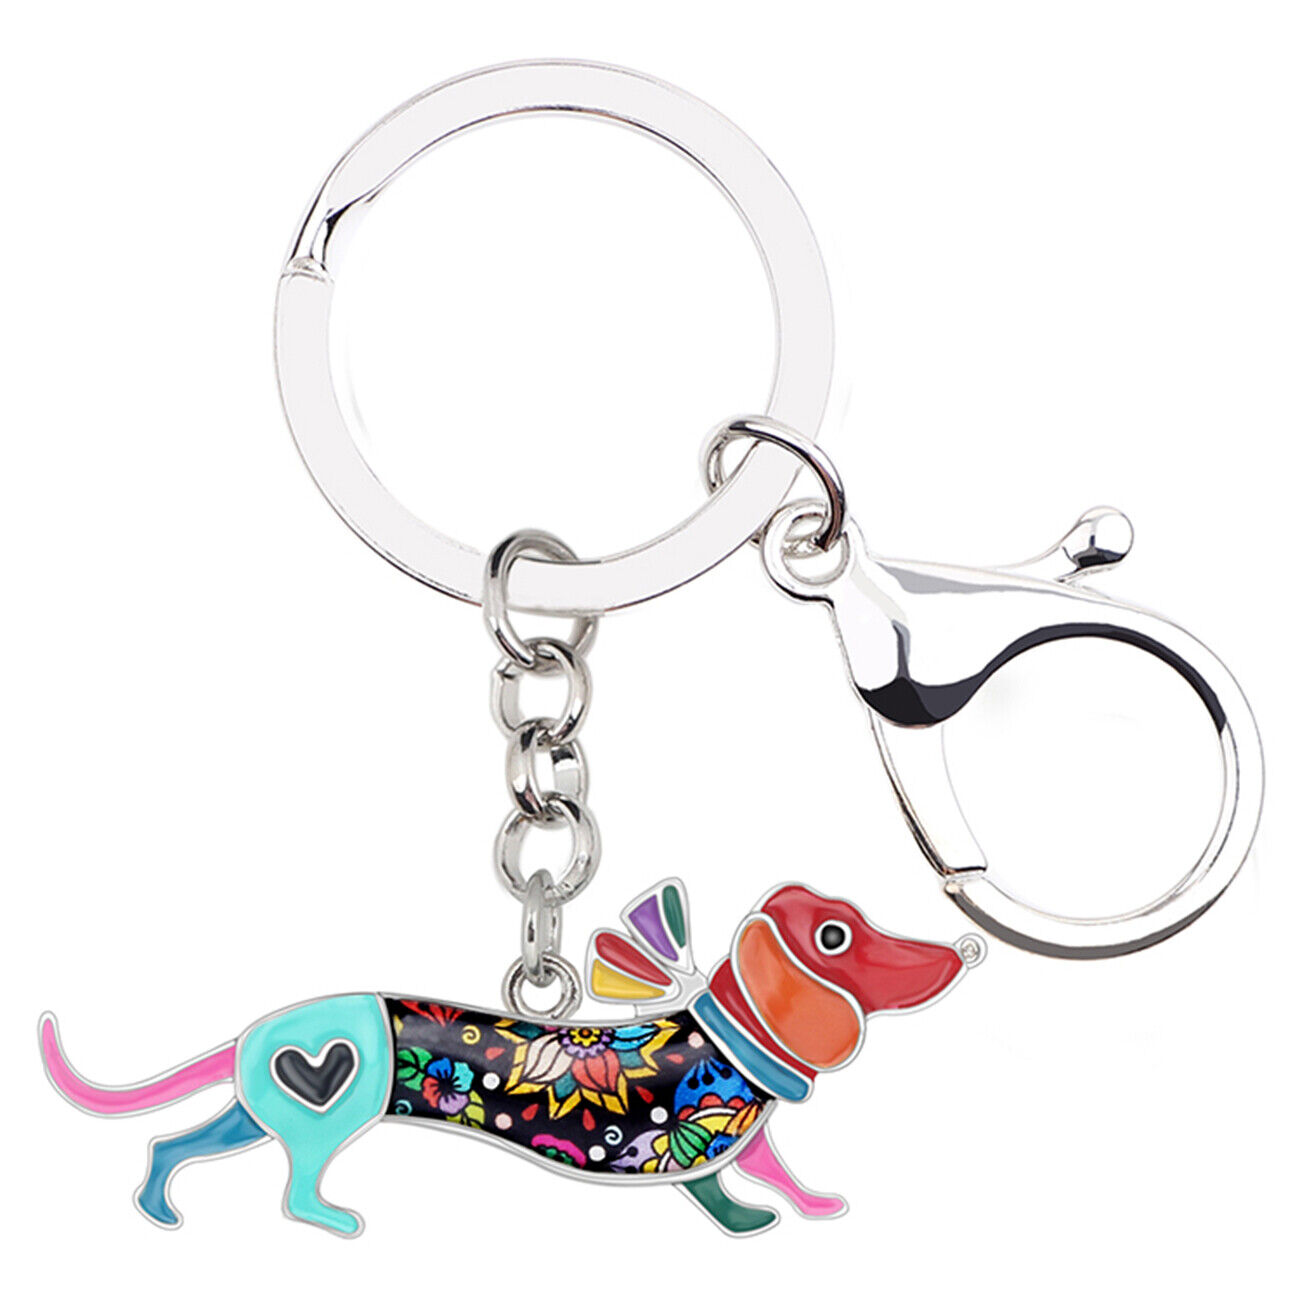 Enamel Alloy Floral Dachshund Dog Keychains Bag Car Key Ring Pets Jewelry Gifts